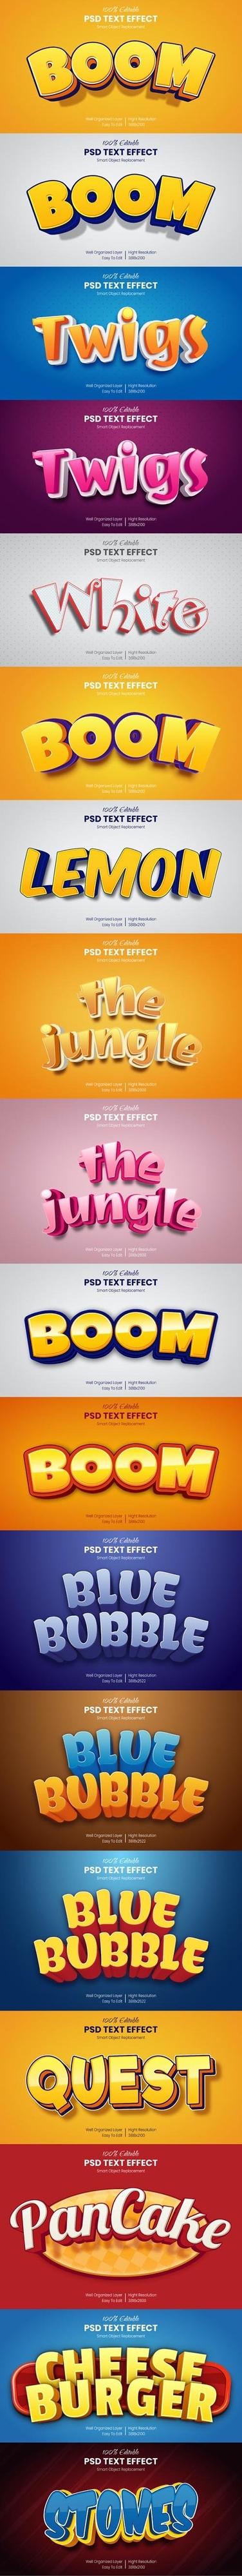 18 Cartoon Photoshop Text Effects - Comic Styles